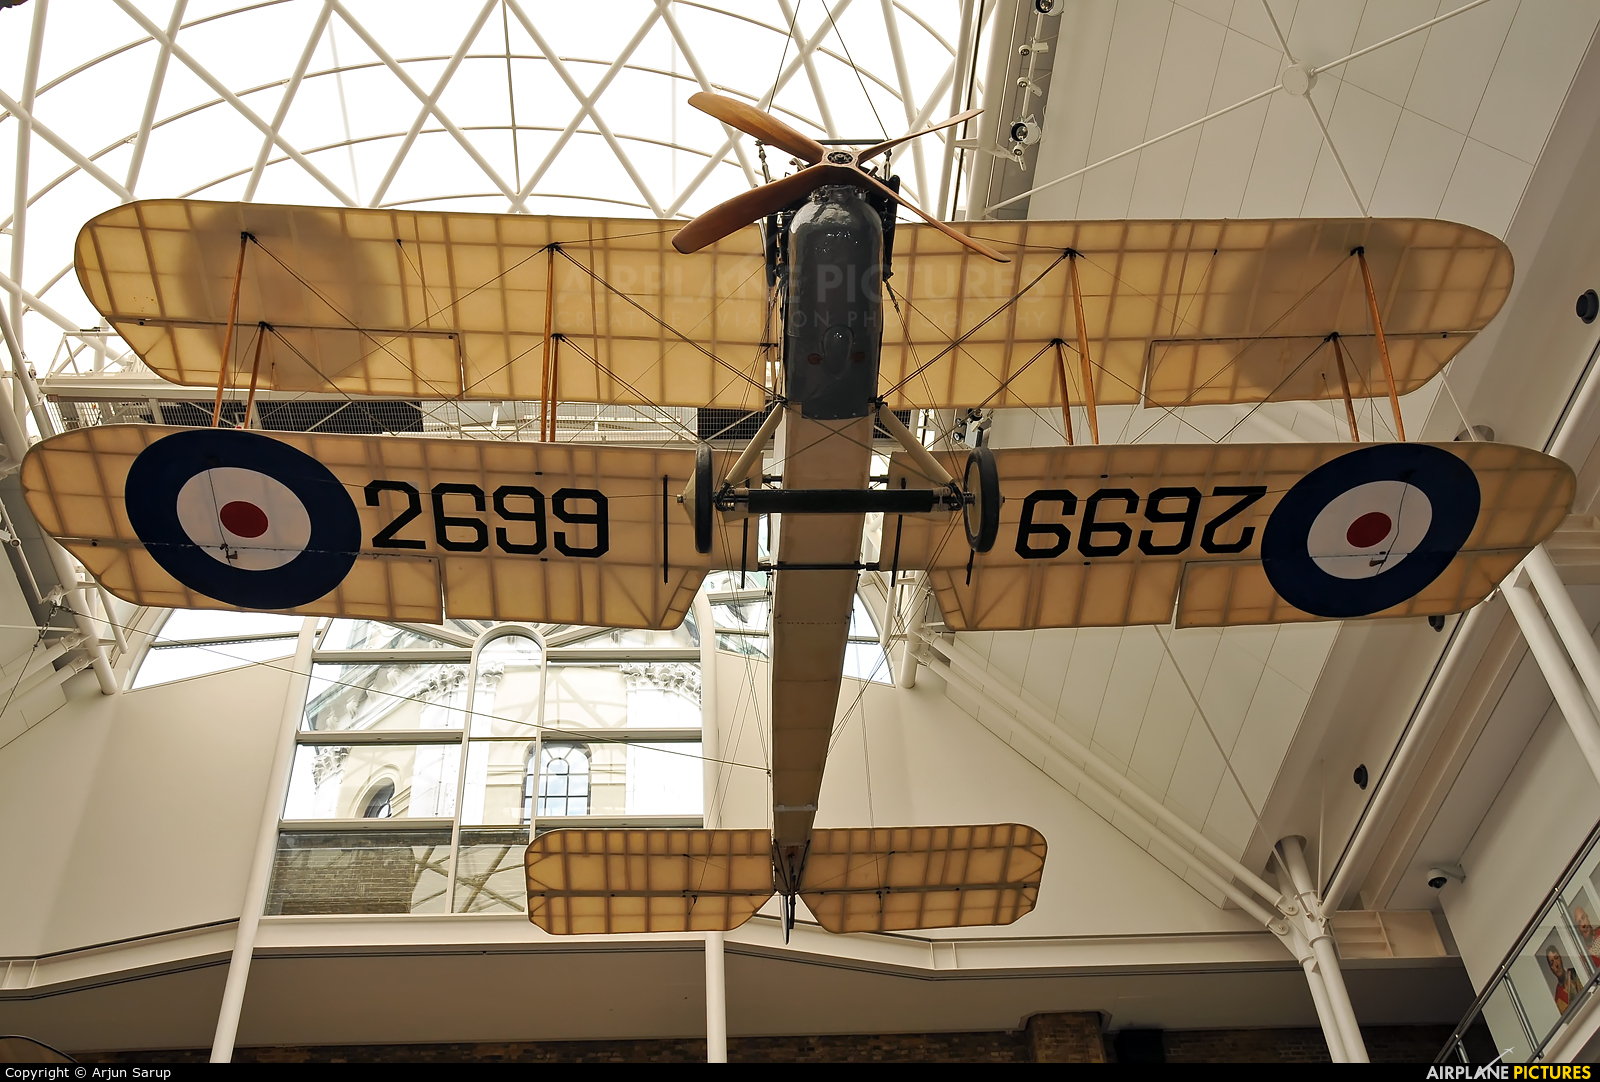 Royal Air Force 2699 aircraft at London - Imperial War Museum